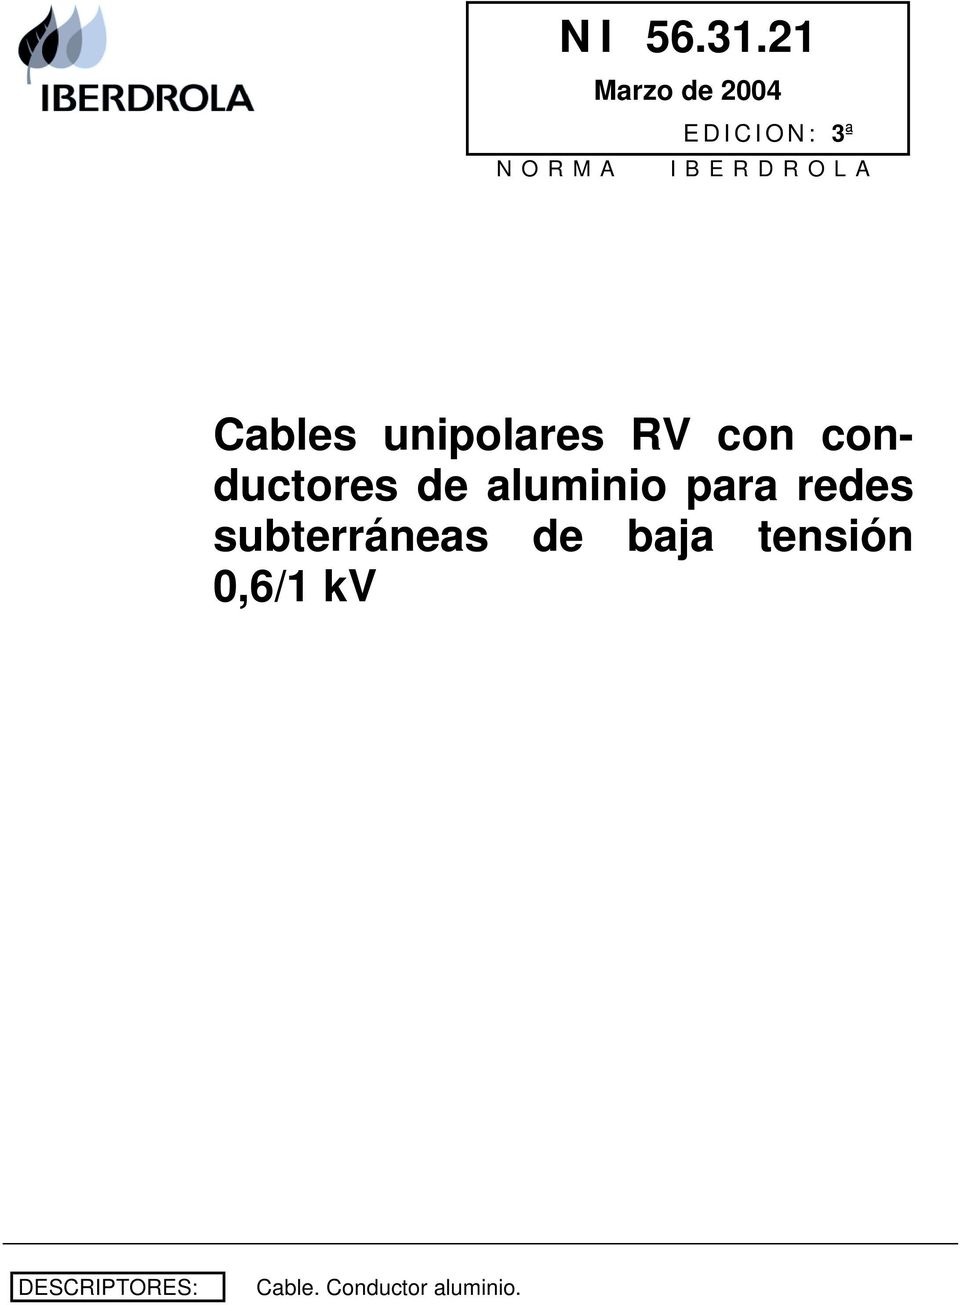 Cables unipolares RV con conductores de aluminio